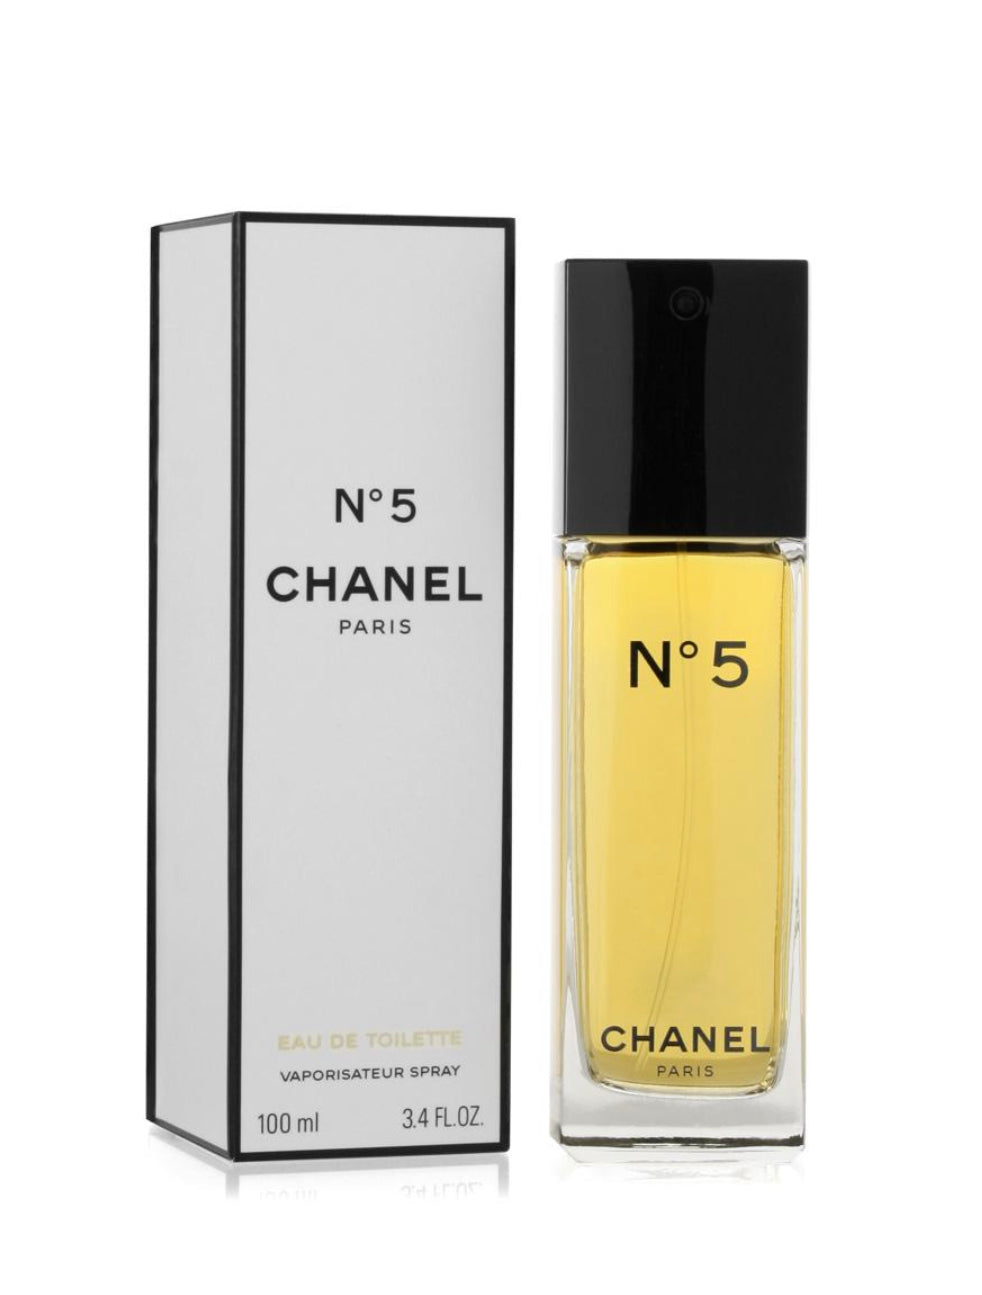 Chanel No 5 Eau de Toilette Spray